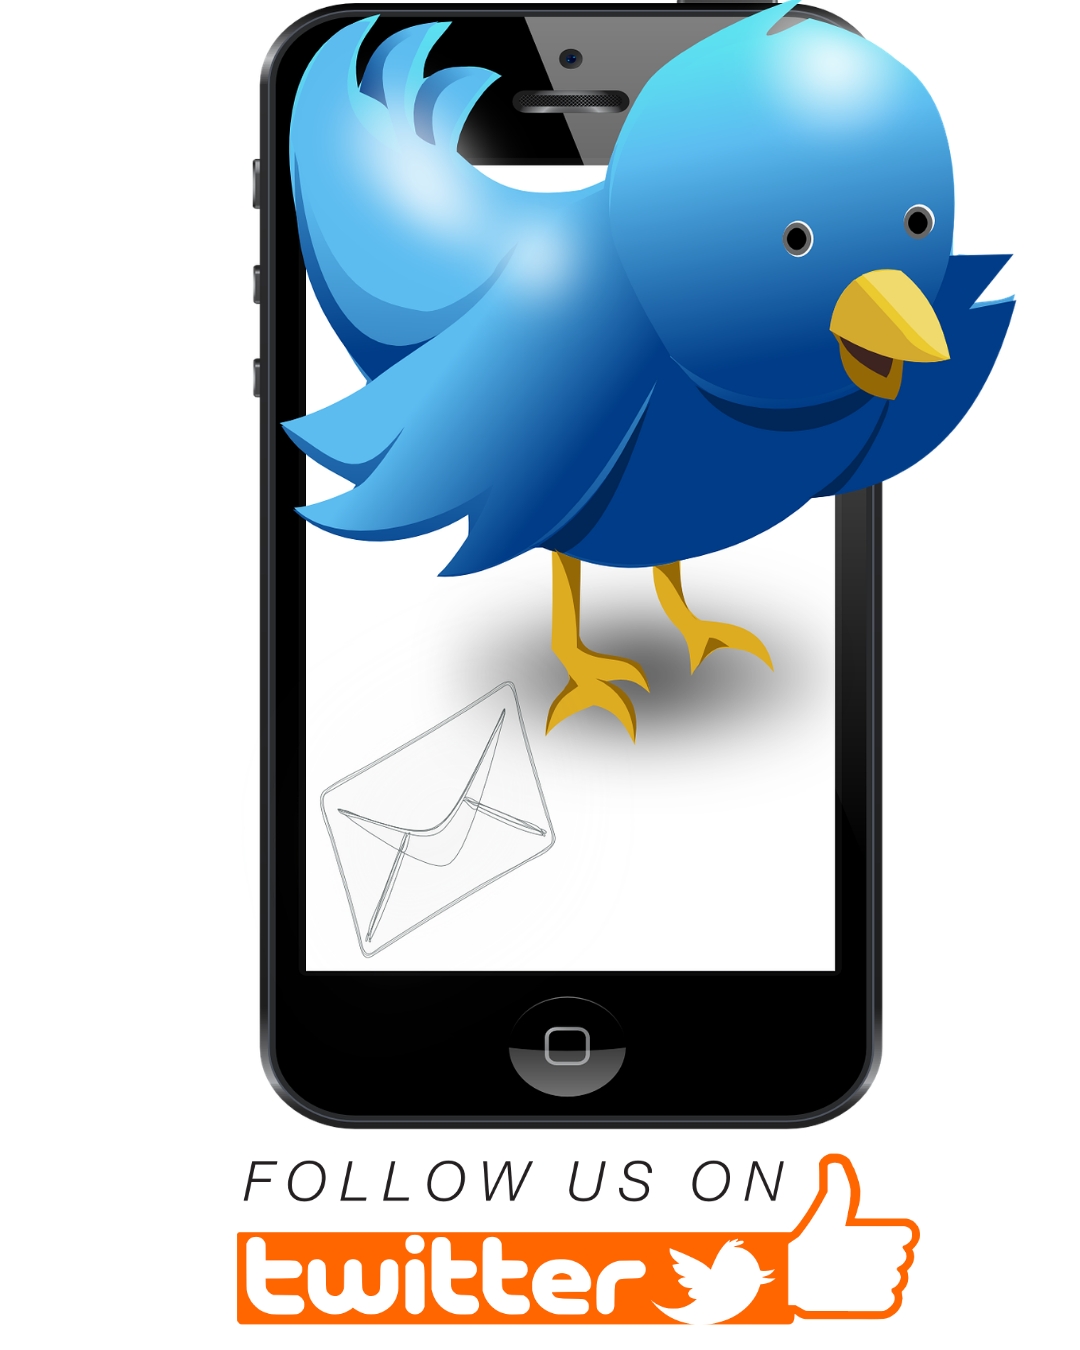 Twitter - phone and blue bird image